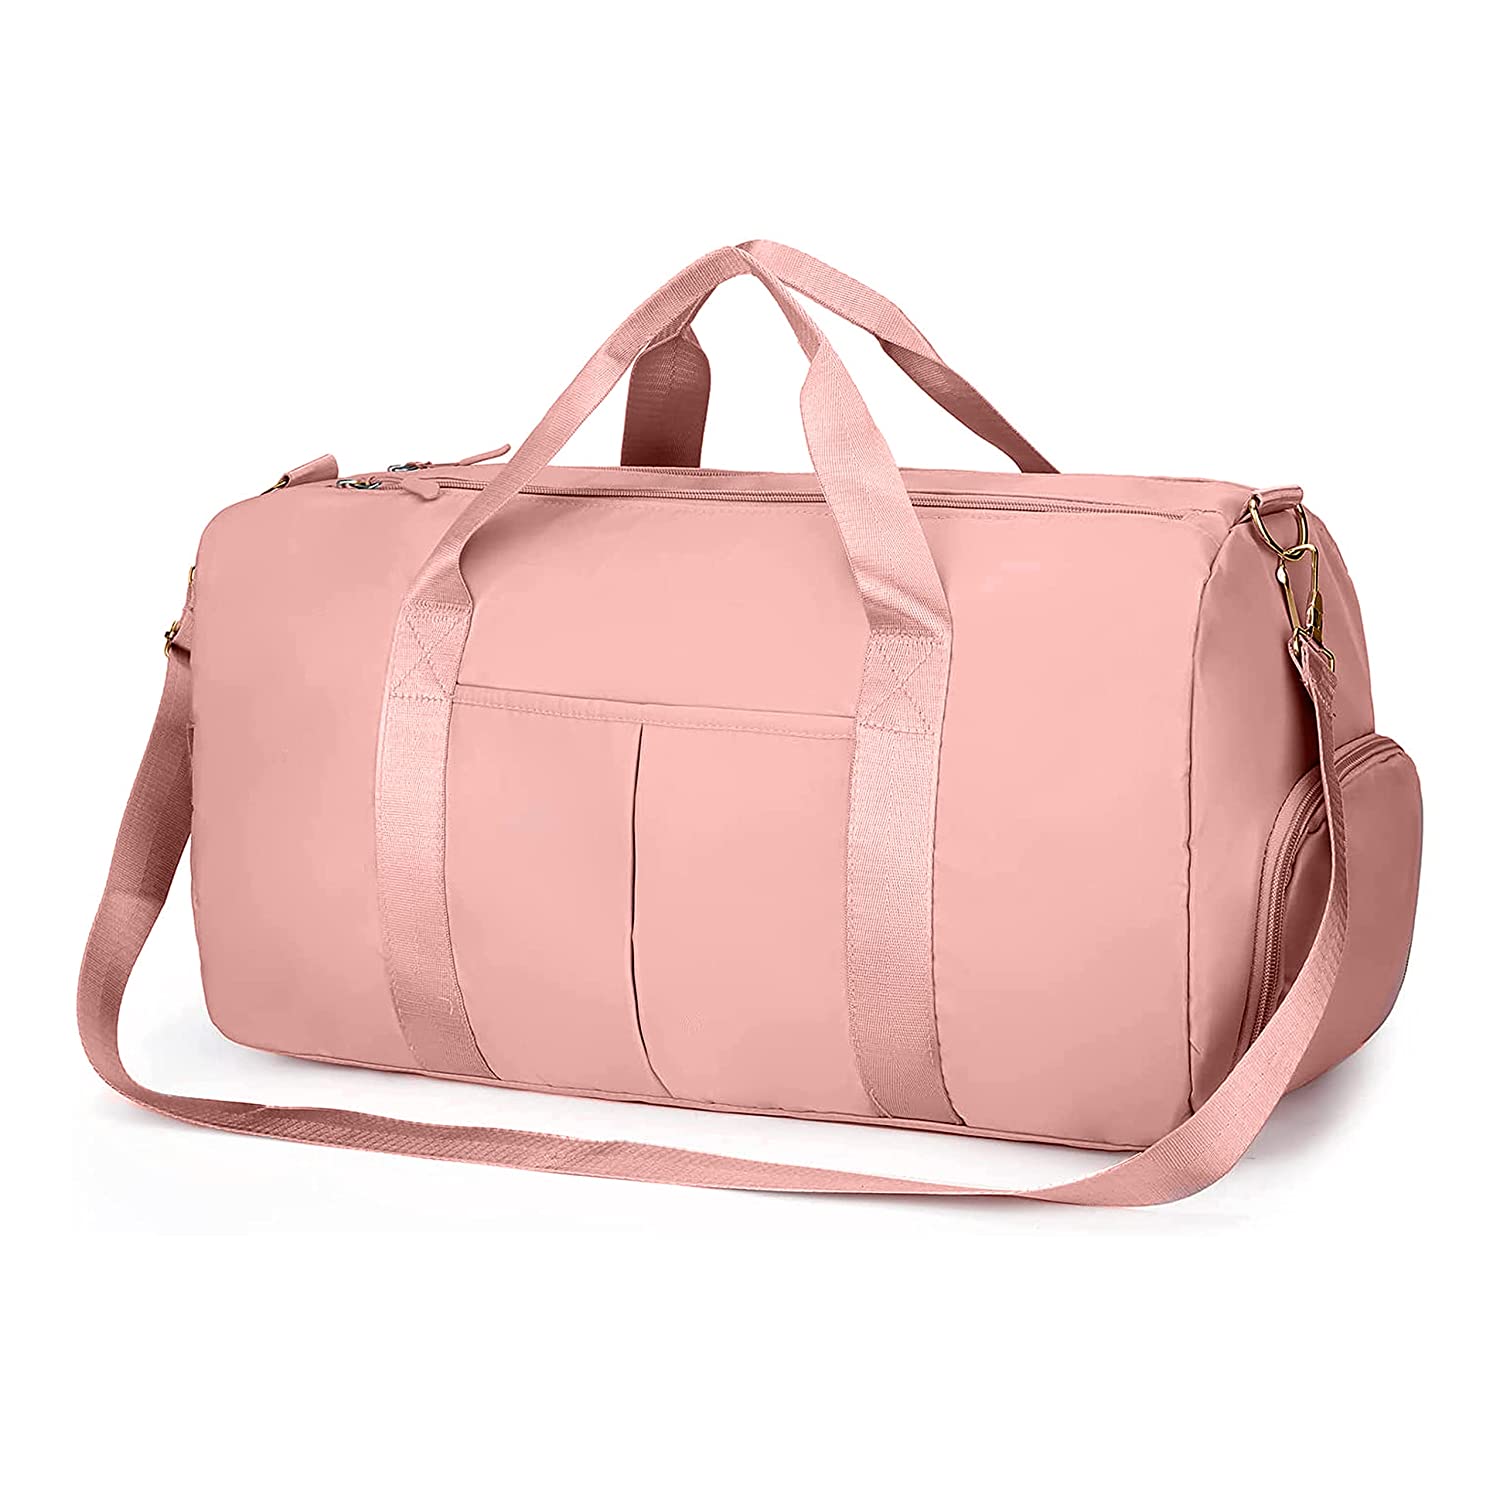 storite-small-foldable-travel-duffel-bag